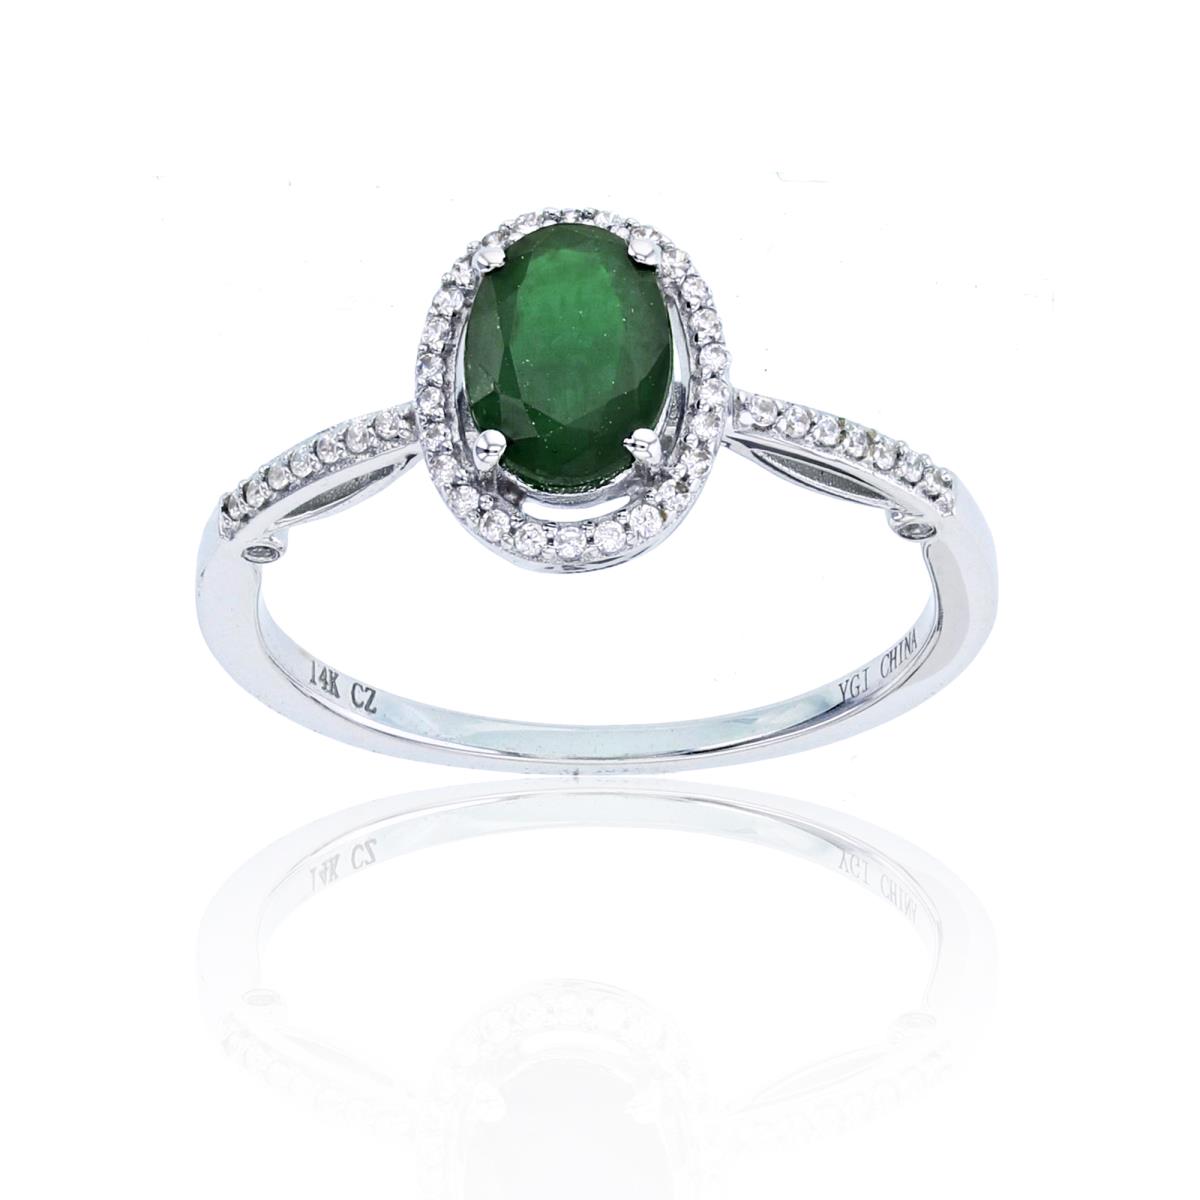 14K White Gold 0.14cttw Rnd Diamonds & 7x5mm Ov Emerald Halo Ring